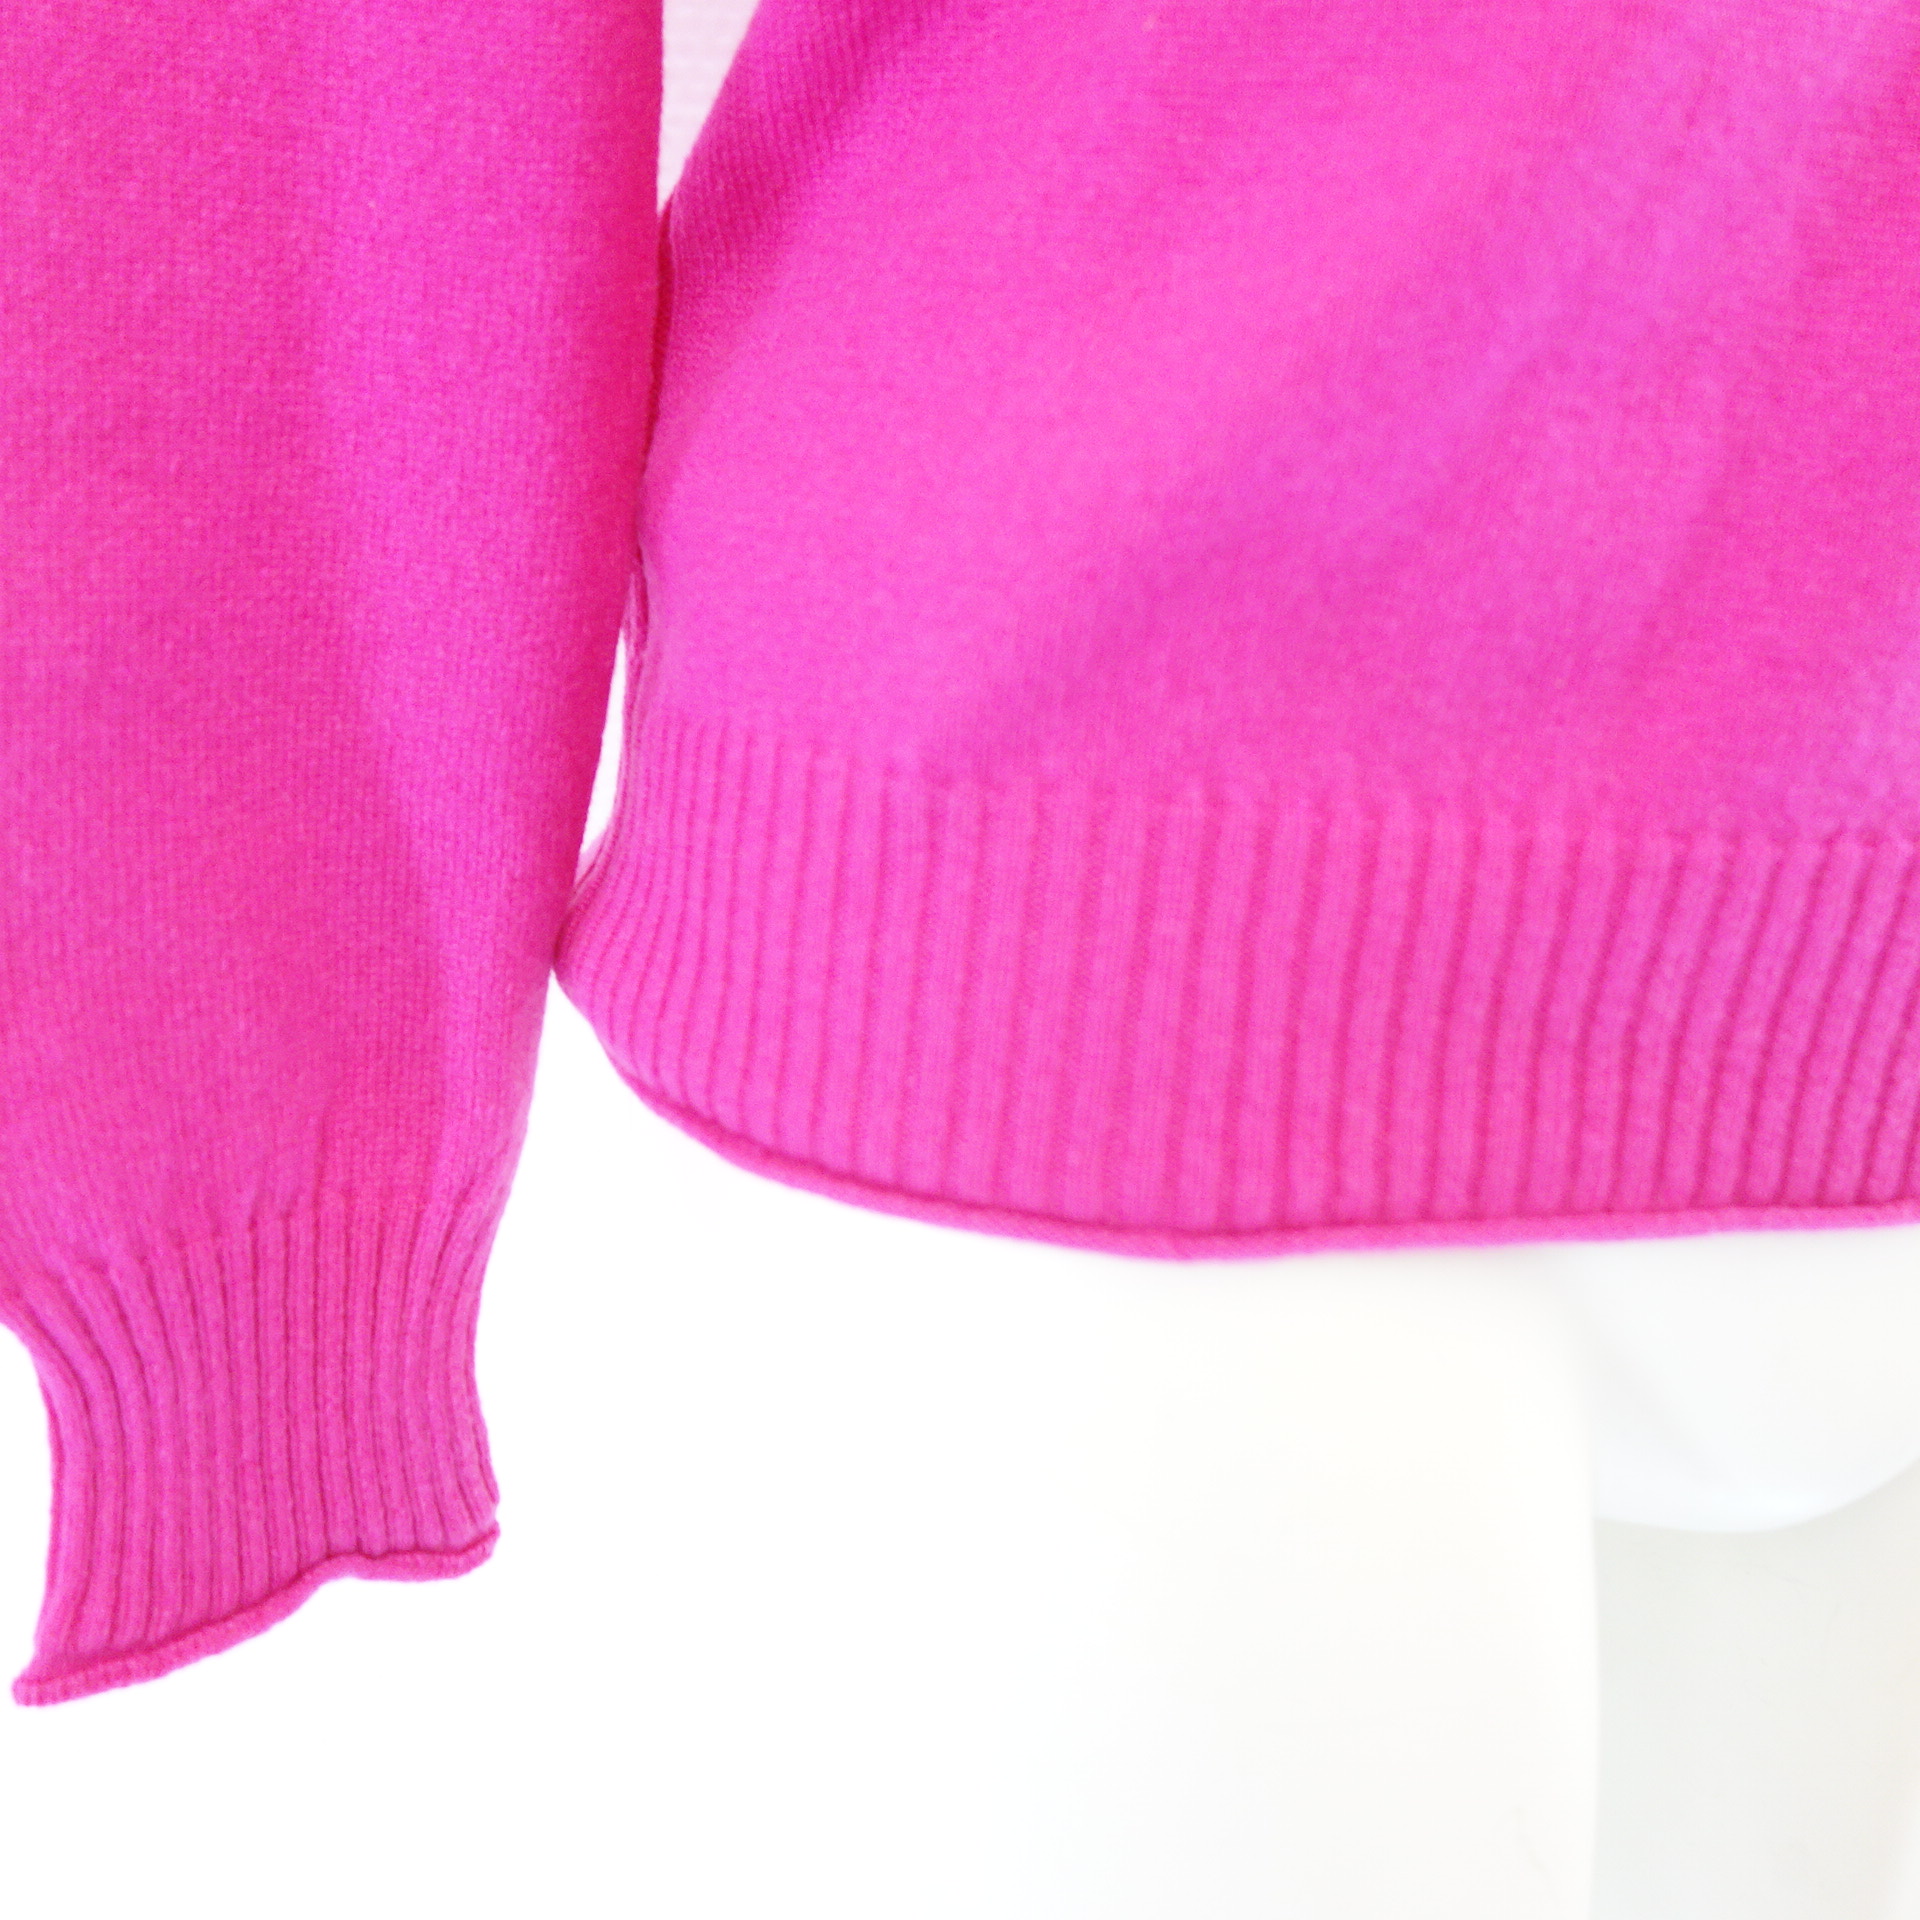 AMINA RUBINACCI Damen Kaschmir Pullover mit Kapuze Pink Größe XS